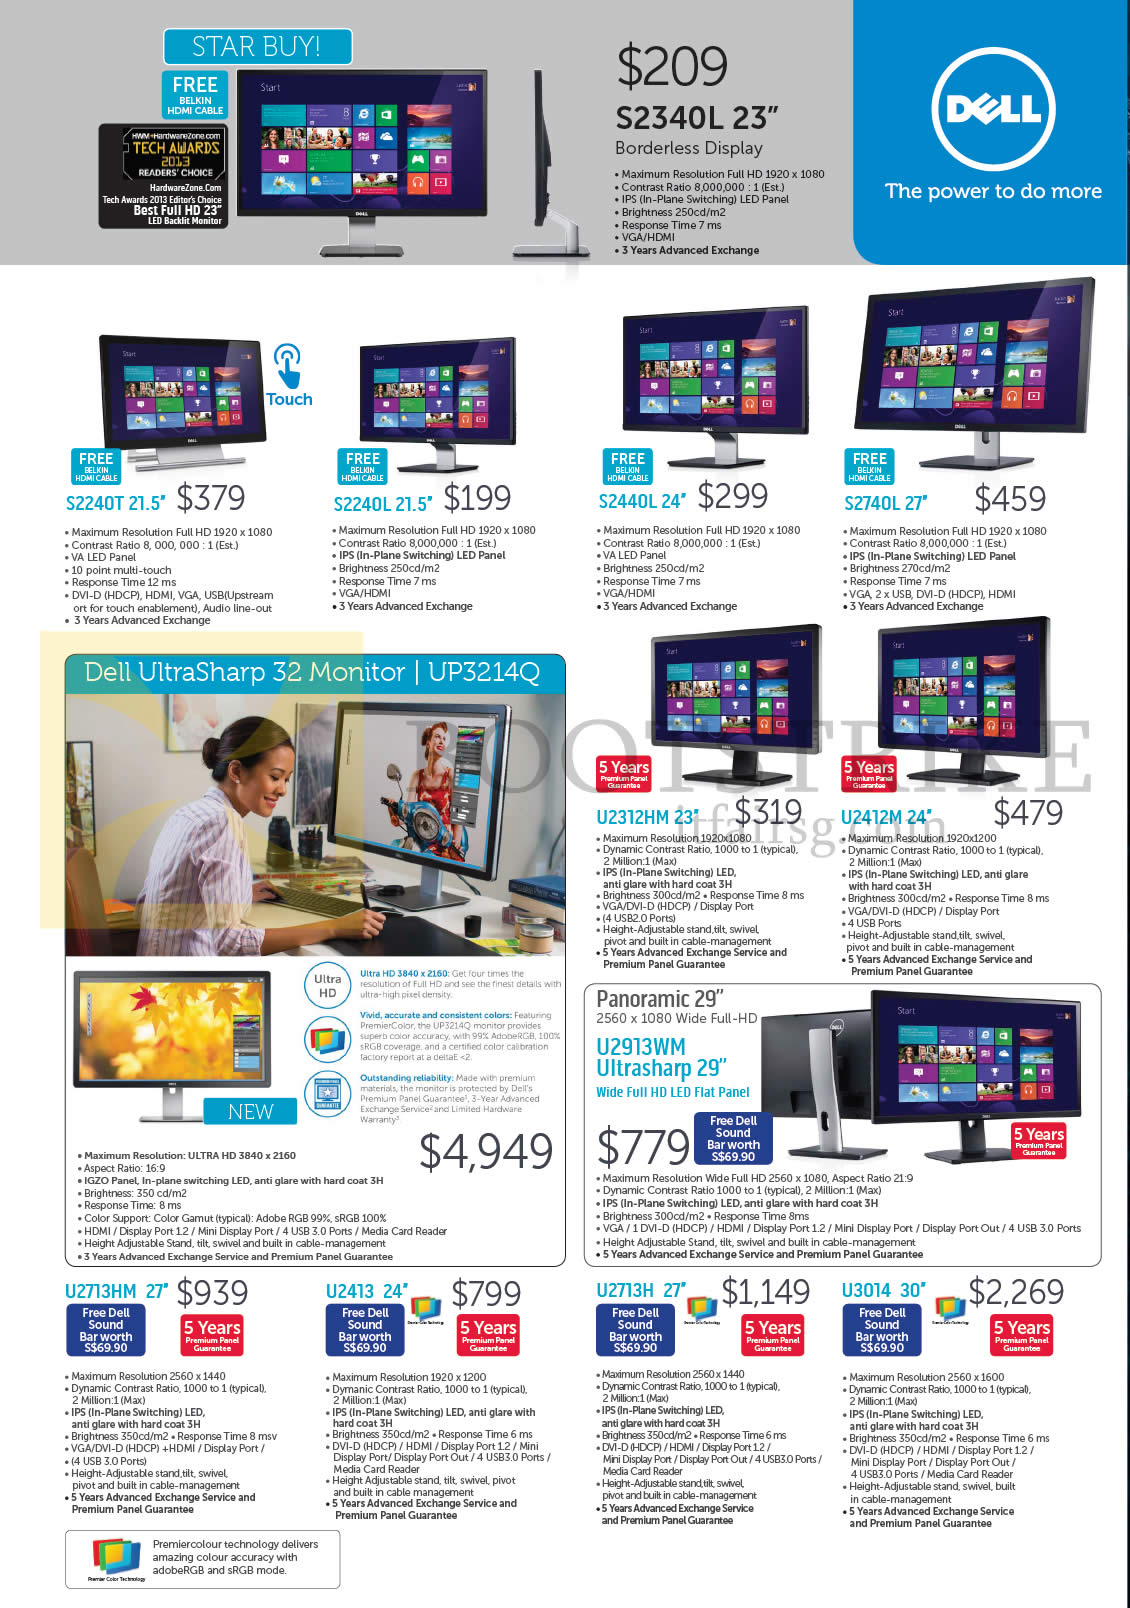 SITEX 2013 price list image brochure of Dell Monitors LED, IPS, Ultrasharp S2240T, S2240L, U2312HM, U2412M, U2913WM, U2713HM, U2413, U2713H, U3014